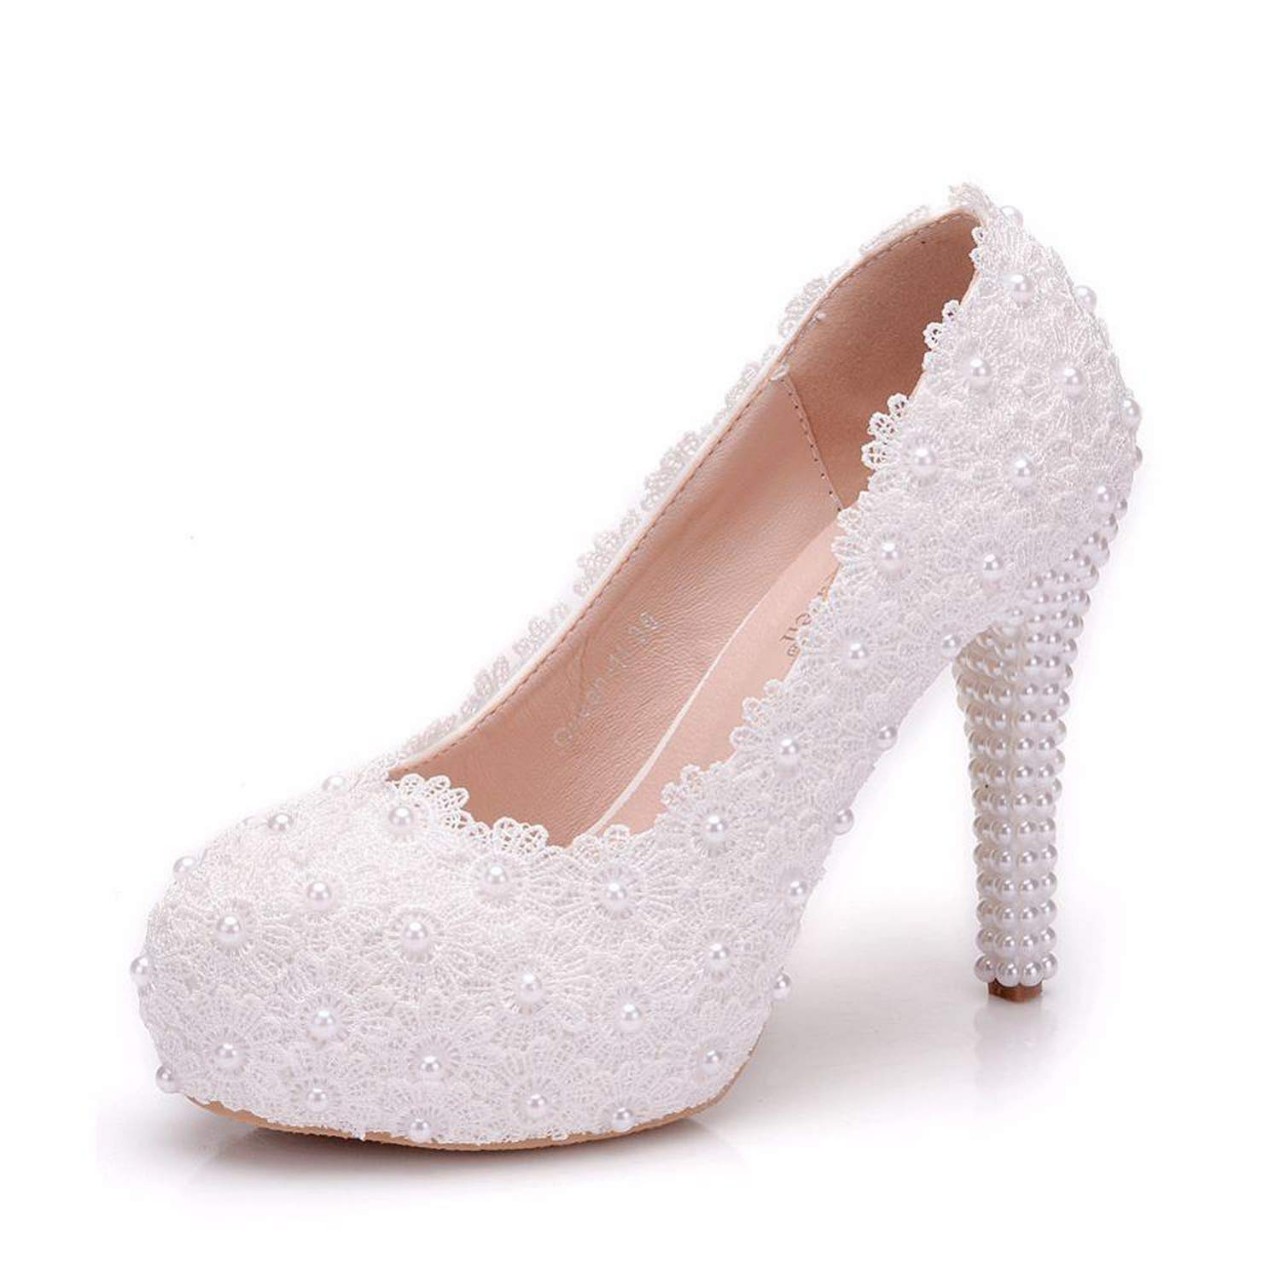 10Cm White Lace Wedding Shoes Heels Pumps for Women Thin Heels Platform Wedding Shoes Party Heels